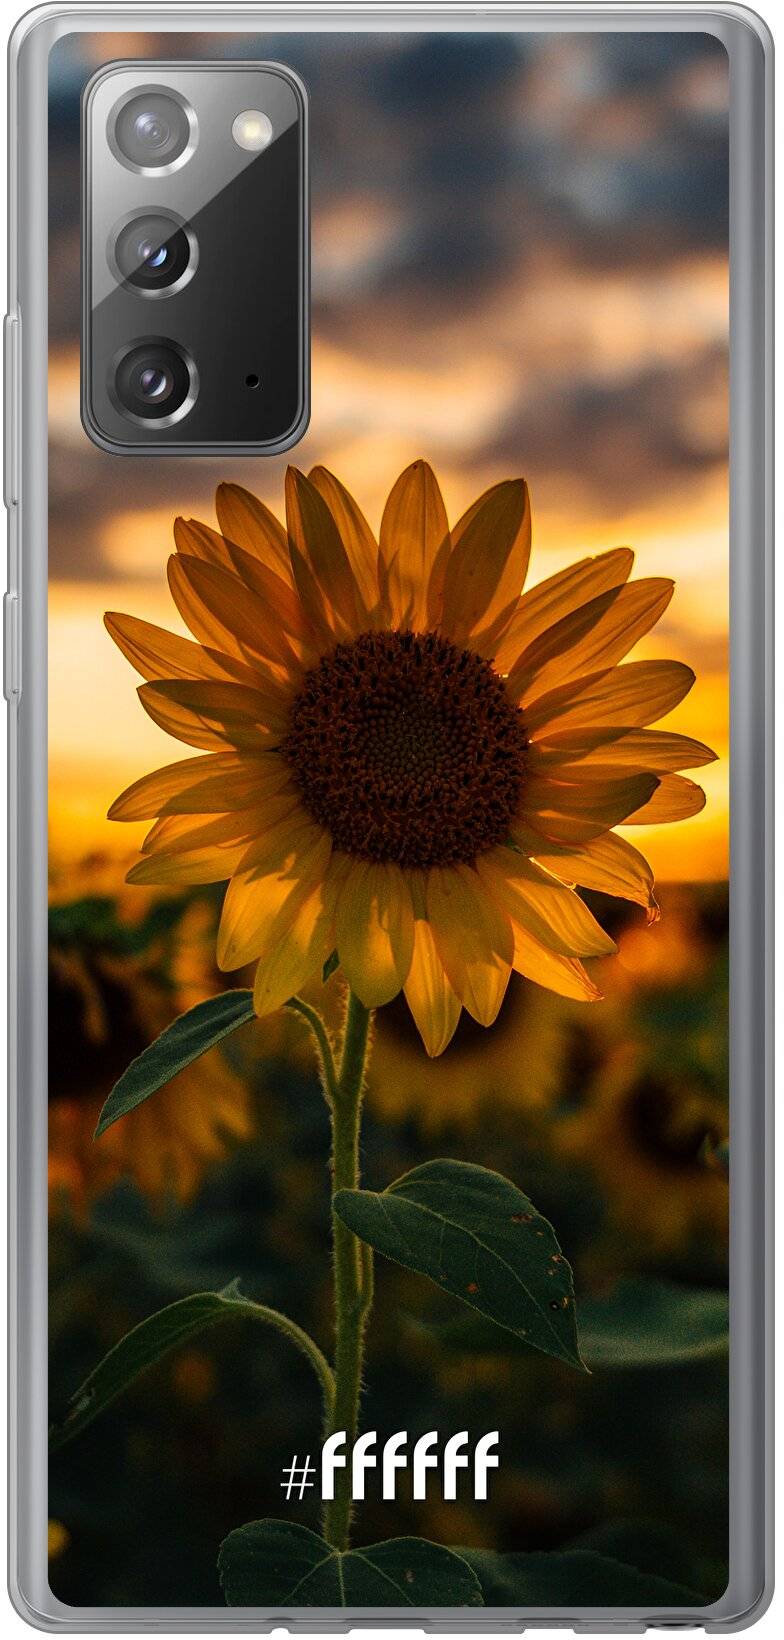 Sunset Sunflower Galaxy Note 20